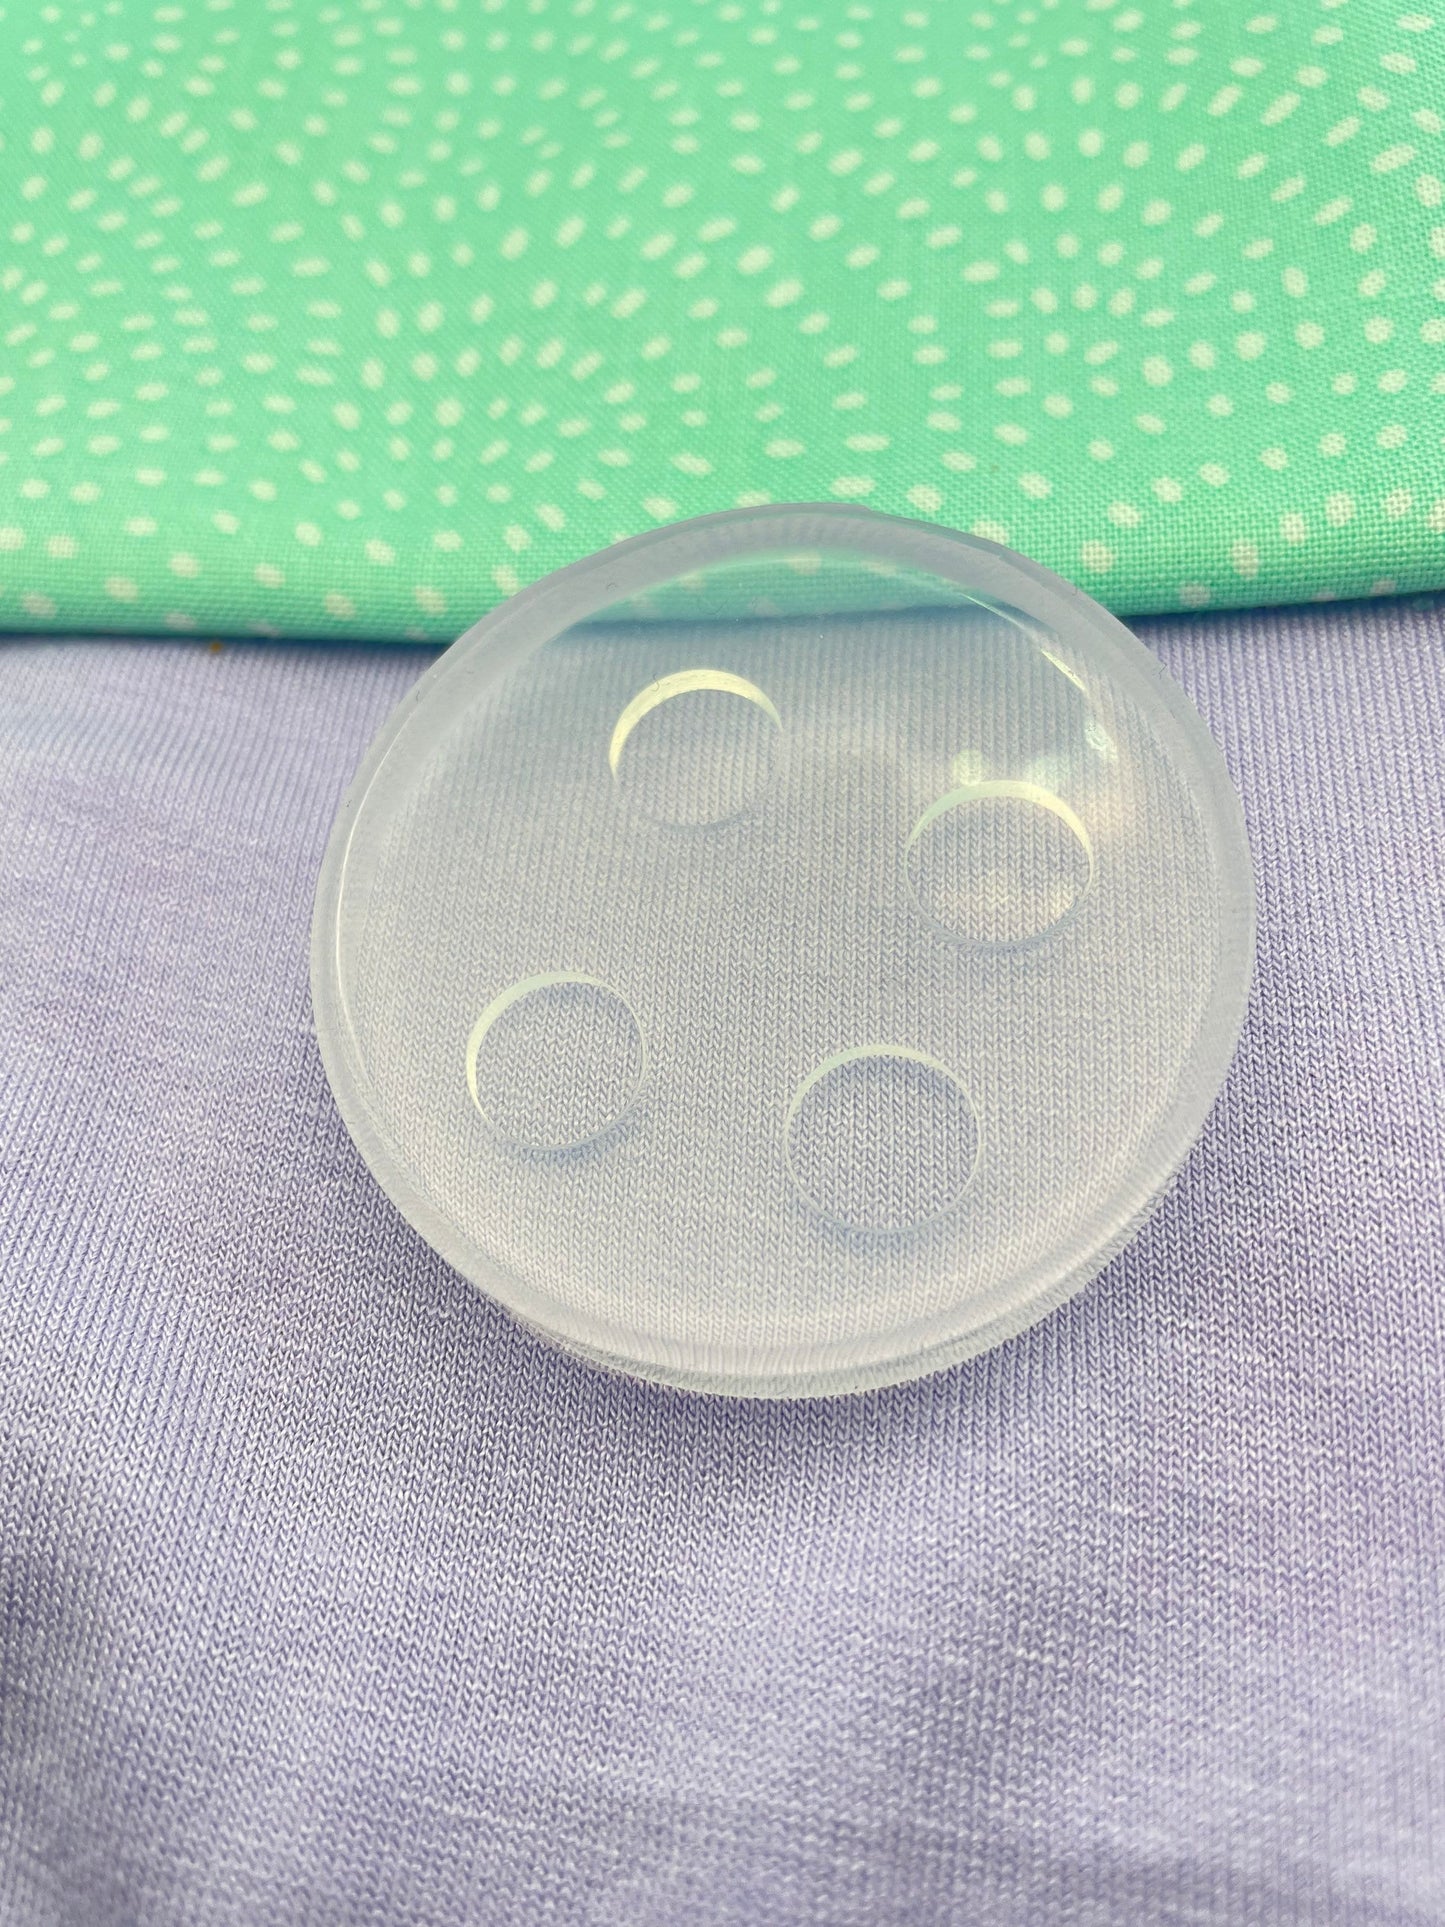 1 cm circle round disc mold 2 mm deep